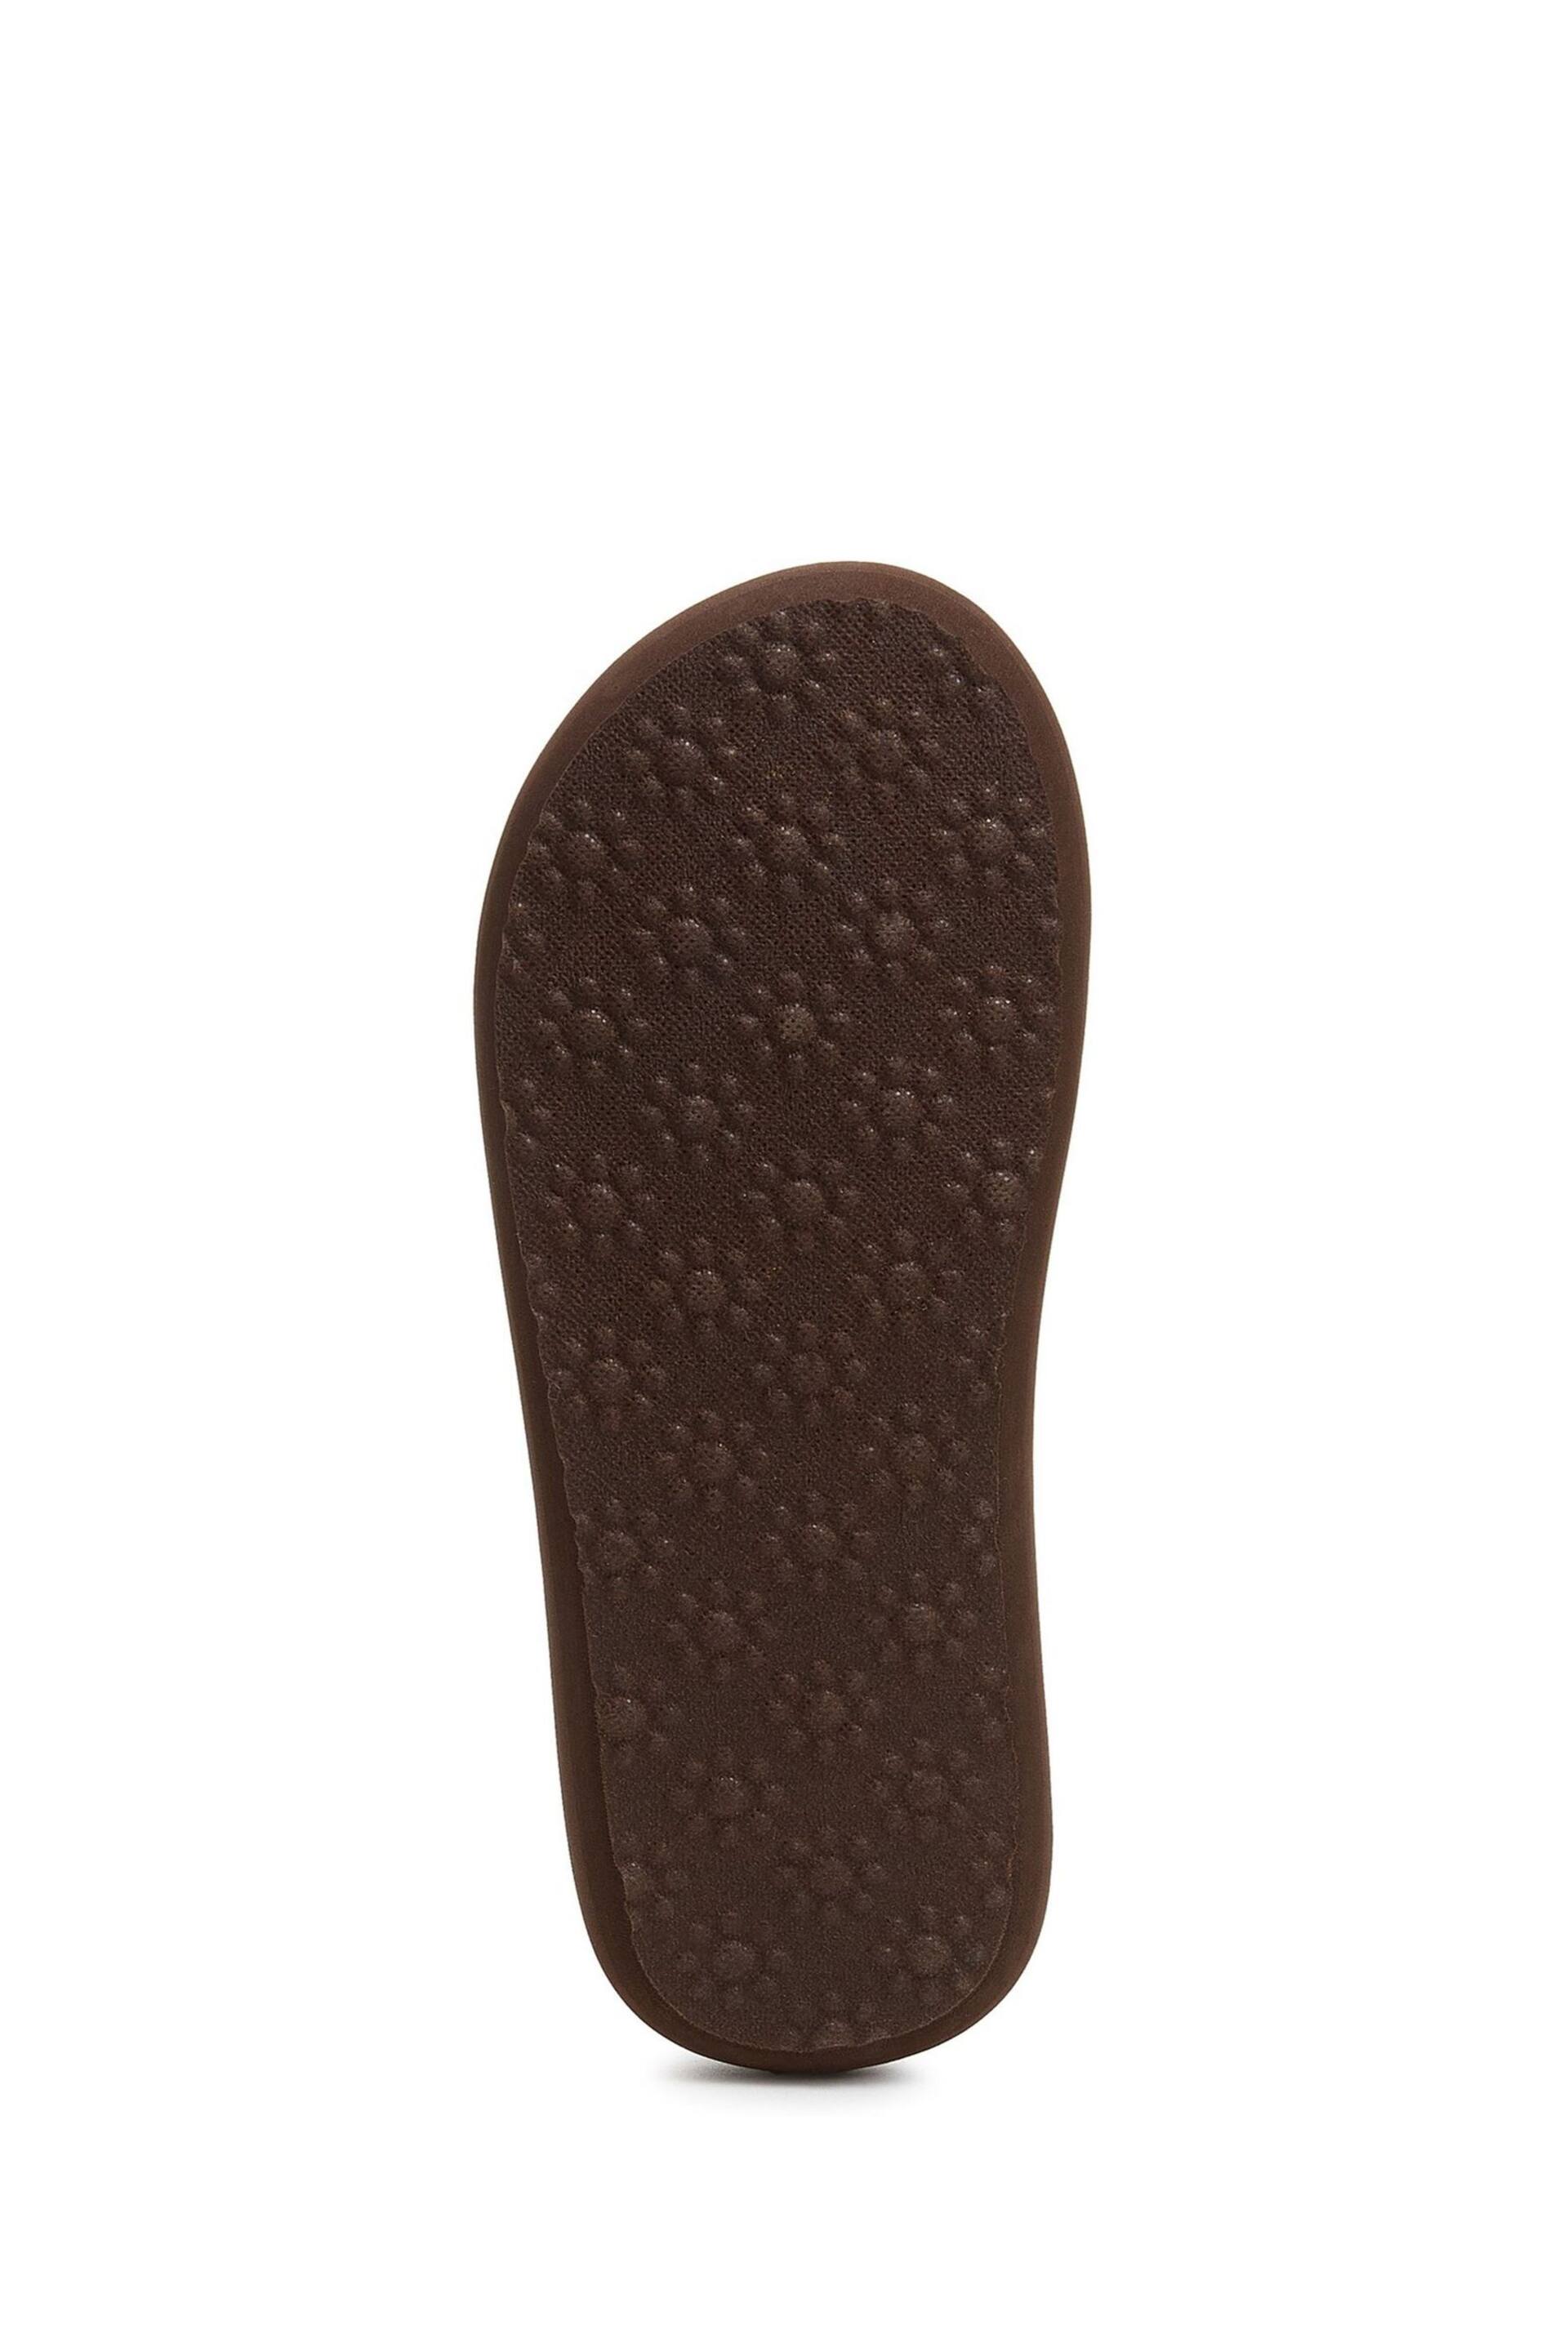 Rocket Dog Spotlight Olney Sequin Fabric Brown Sandals - Image 7 of 7